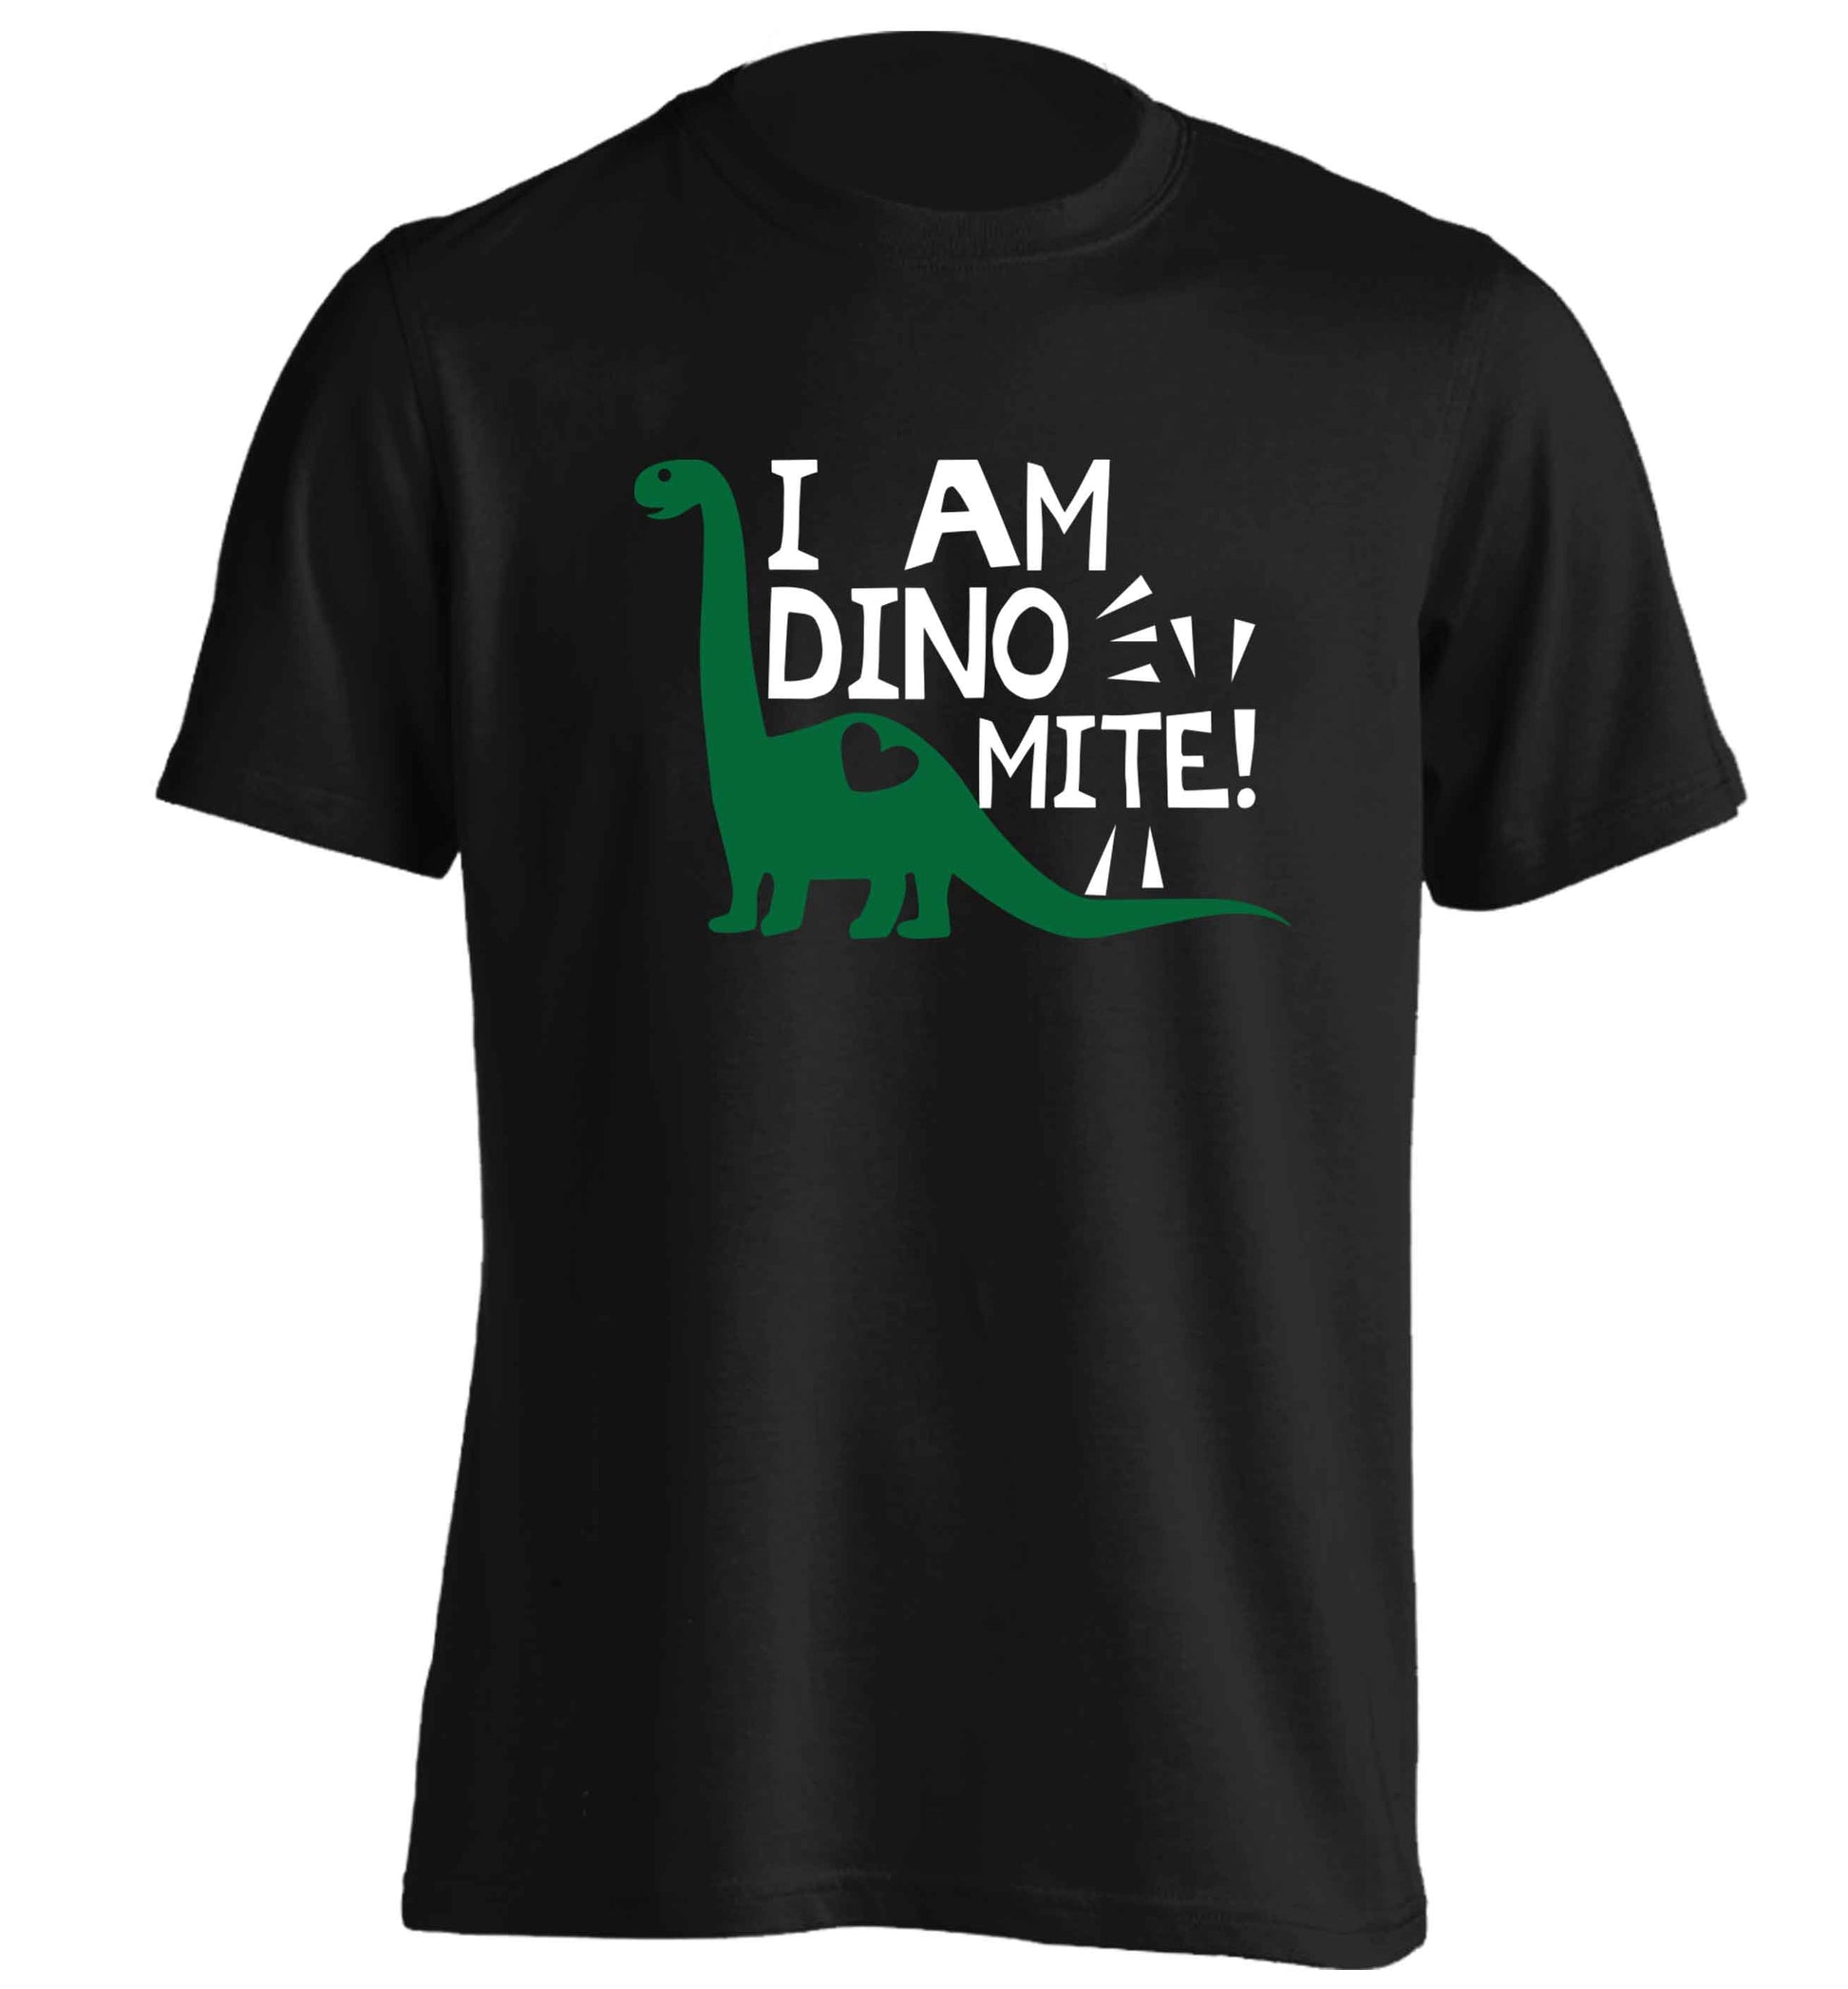 I am dinomite! adults unisex black Tshirt 2XL